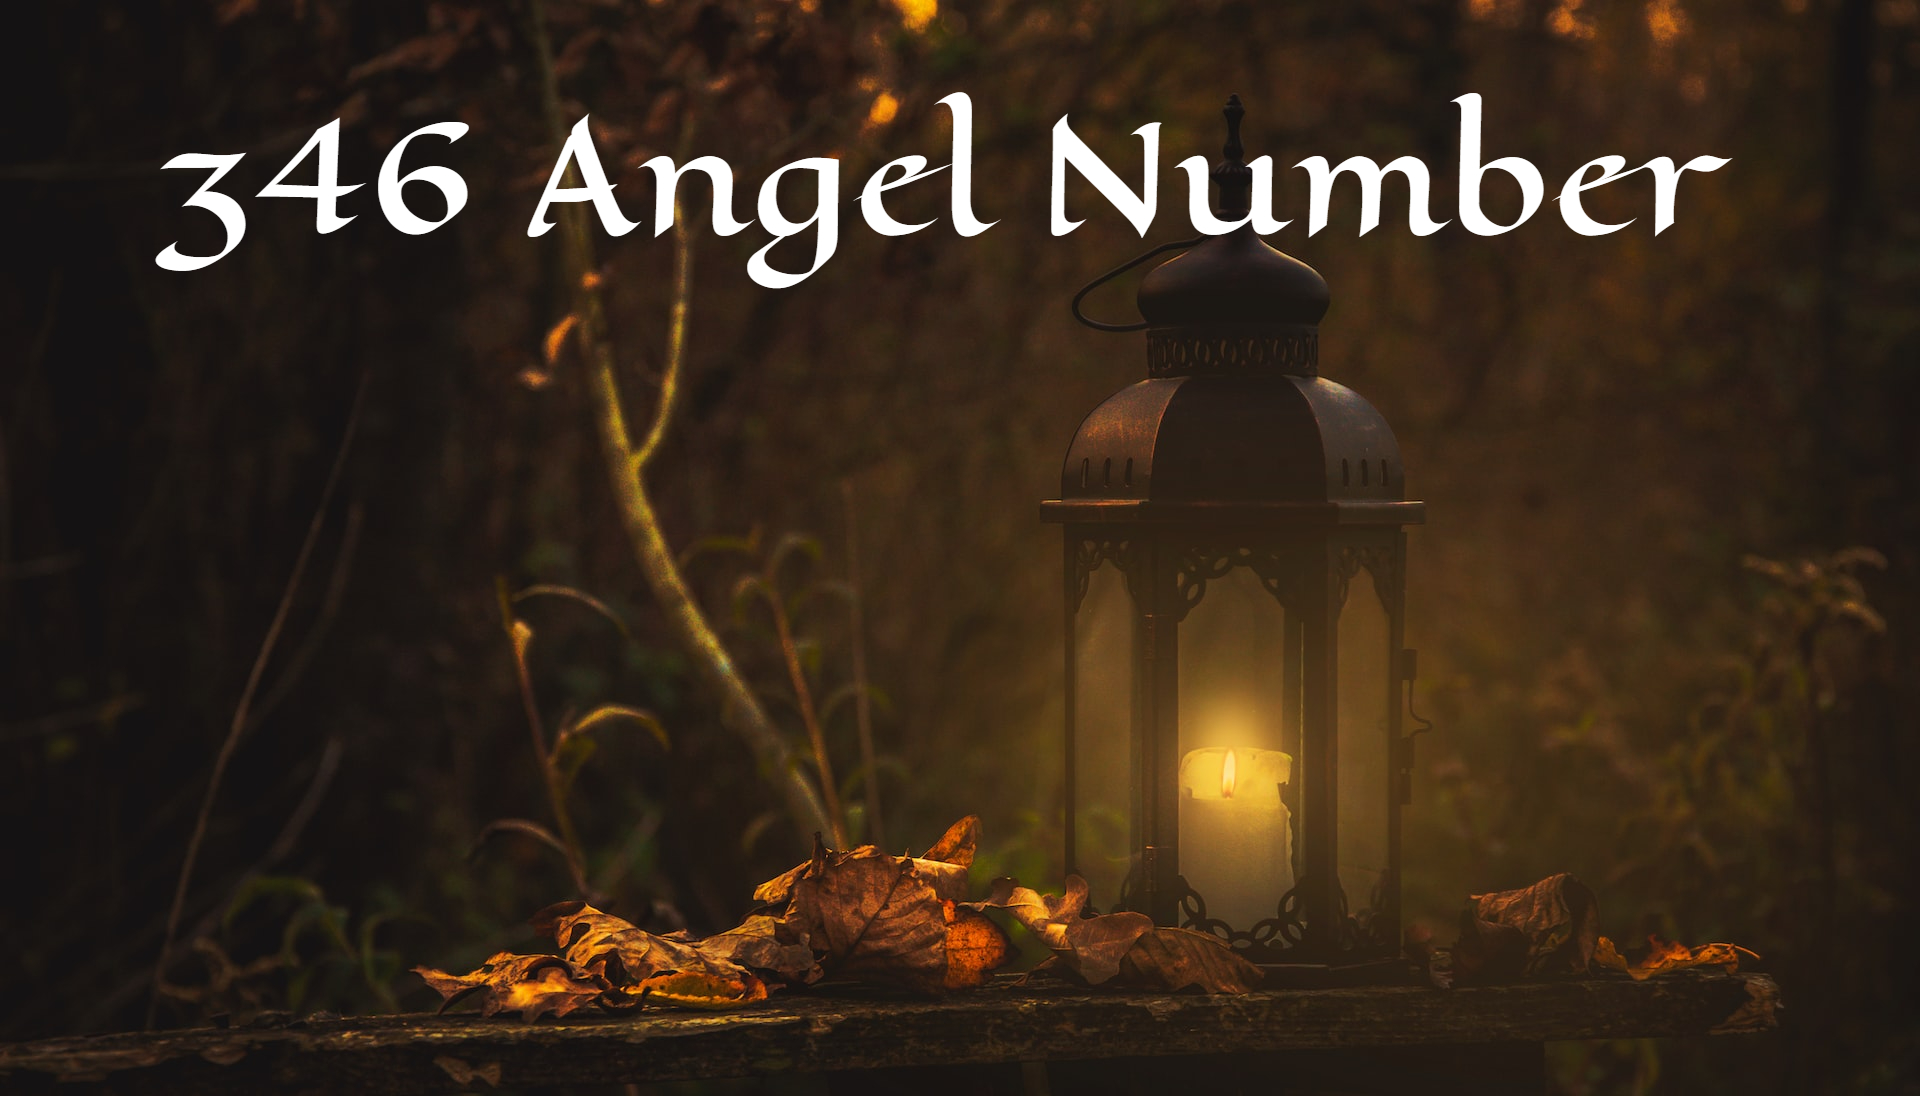 346 Angel Number - Symbol Of Fortune, Prosperity, And Abundance